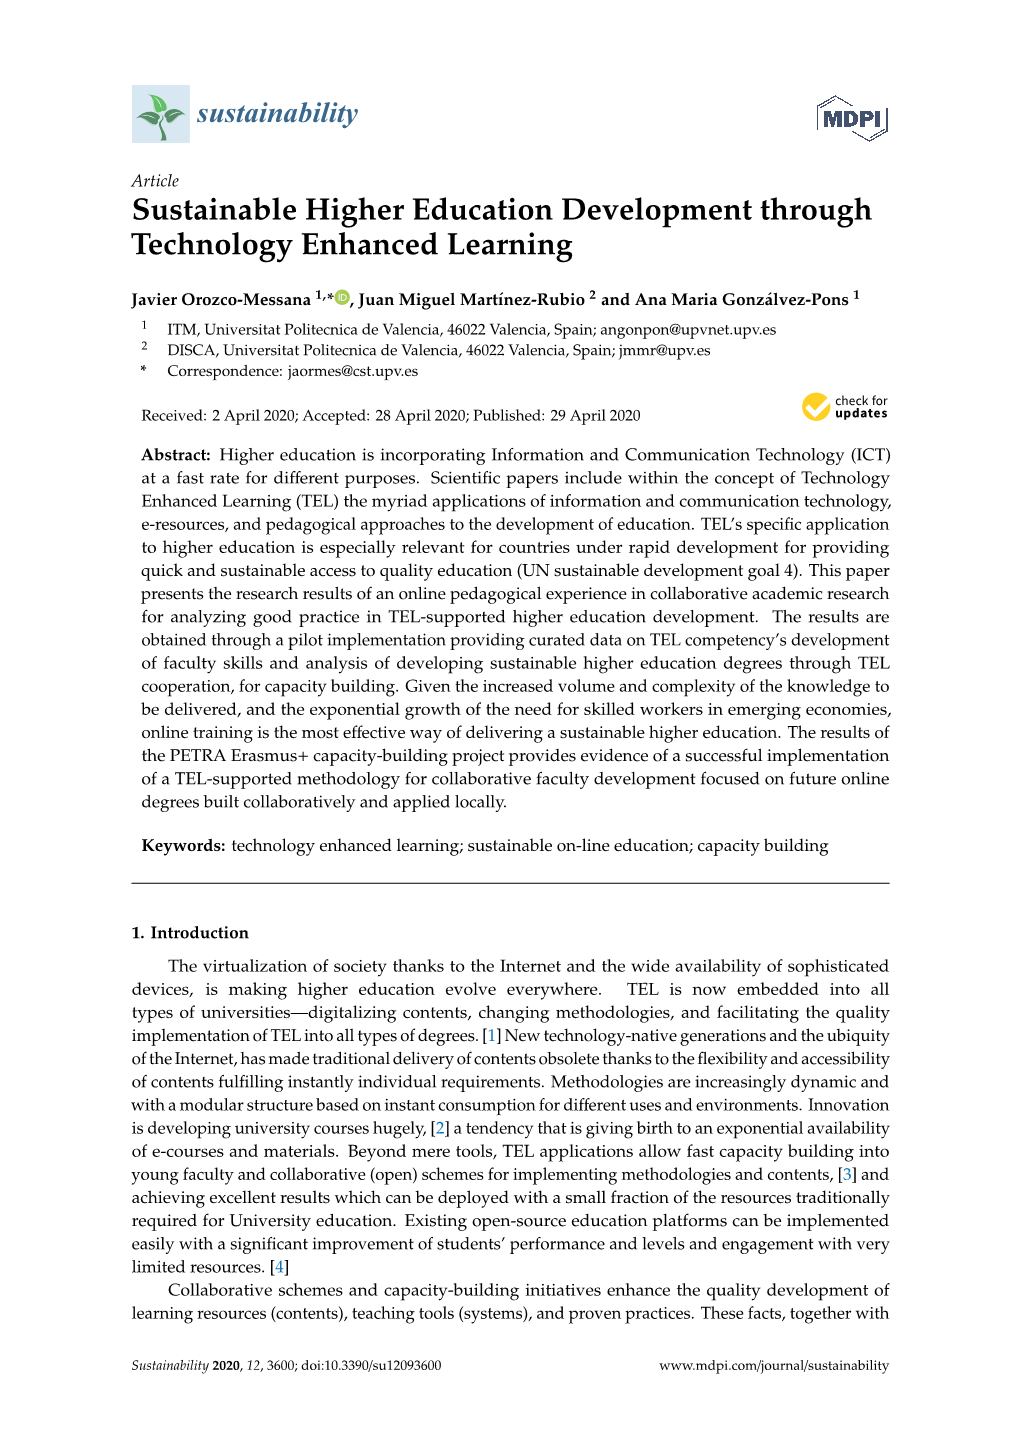 Sustainable Higher Education Development Through Technology Enhanced Learning